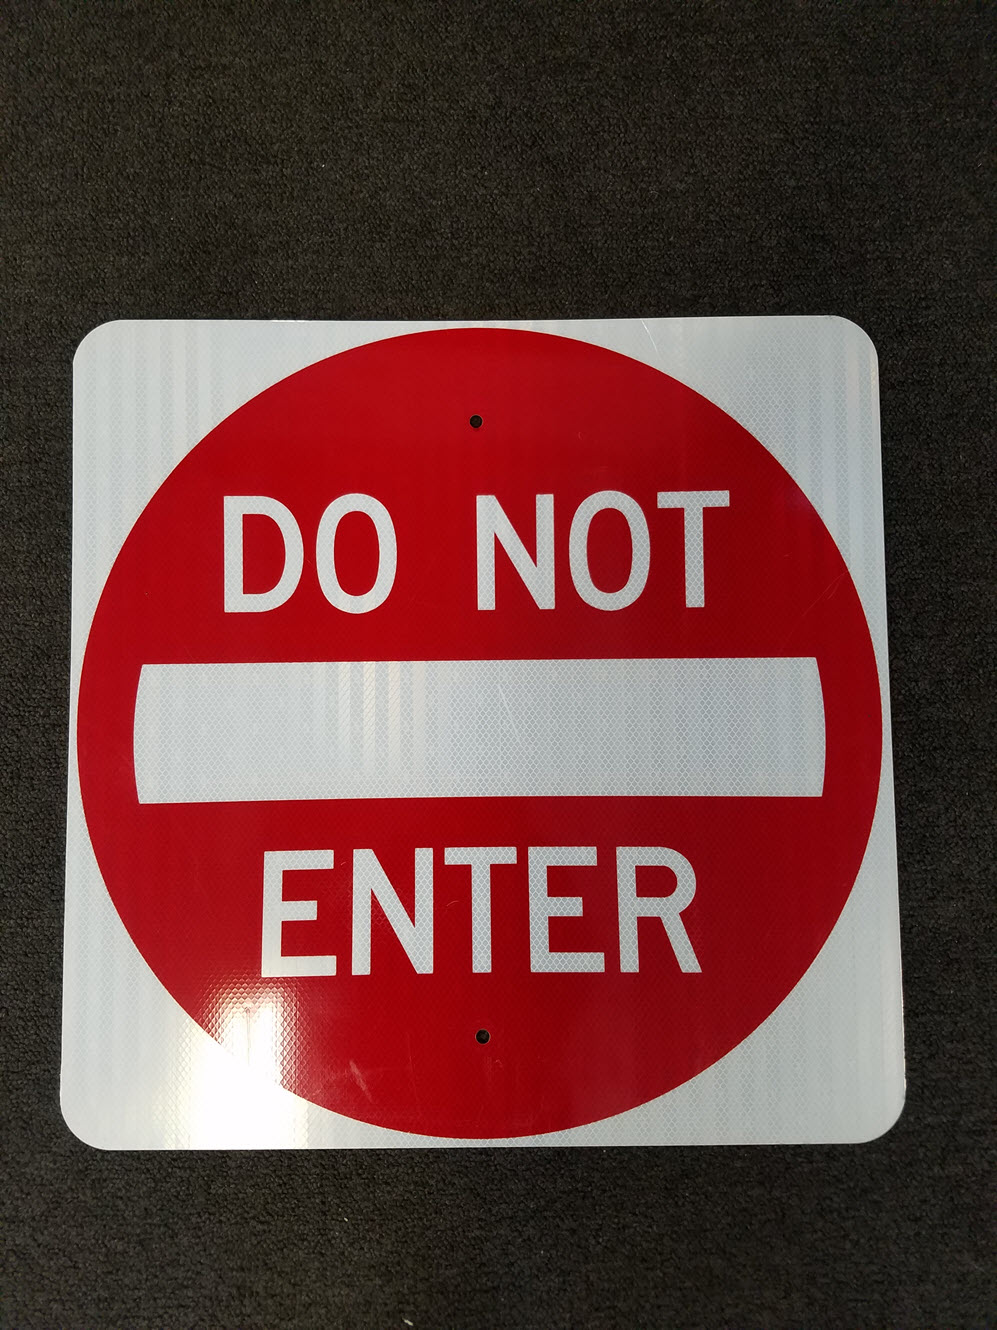 Do Not Enter Signs (2).jpg